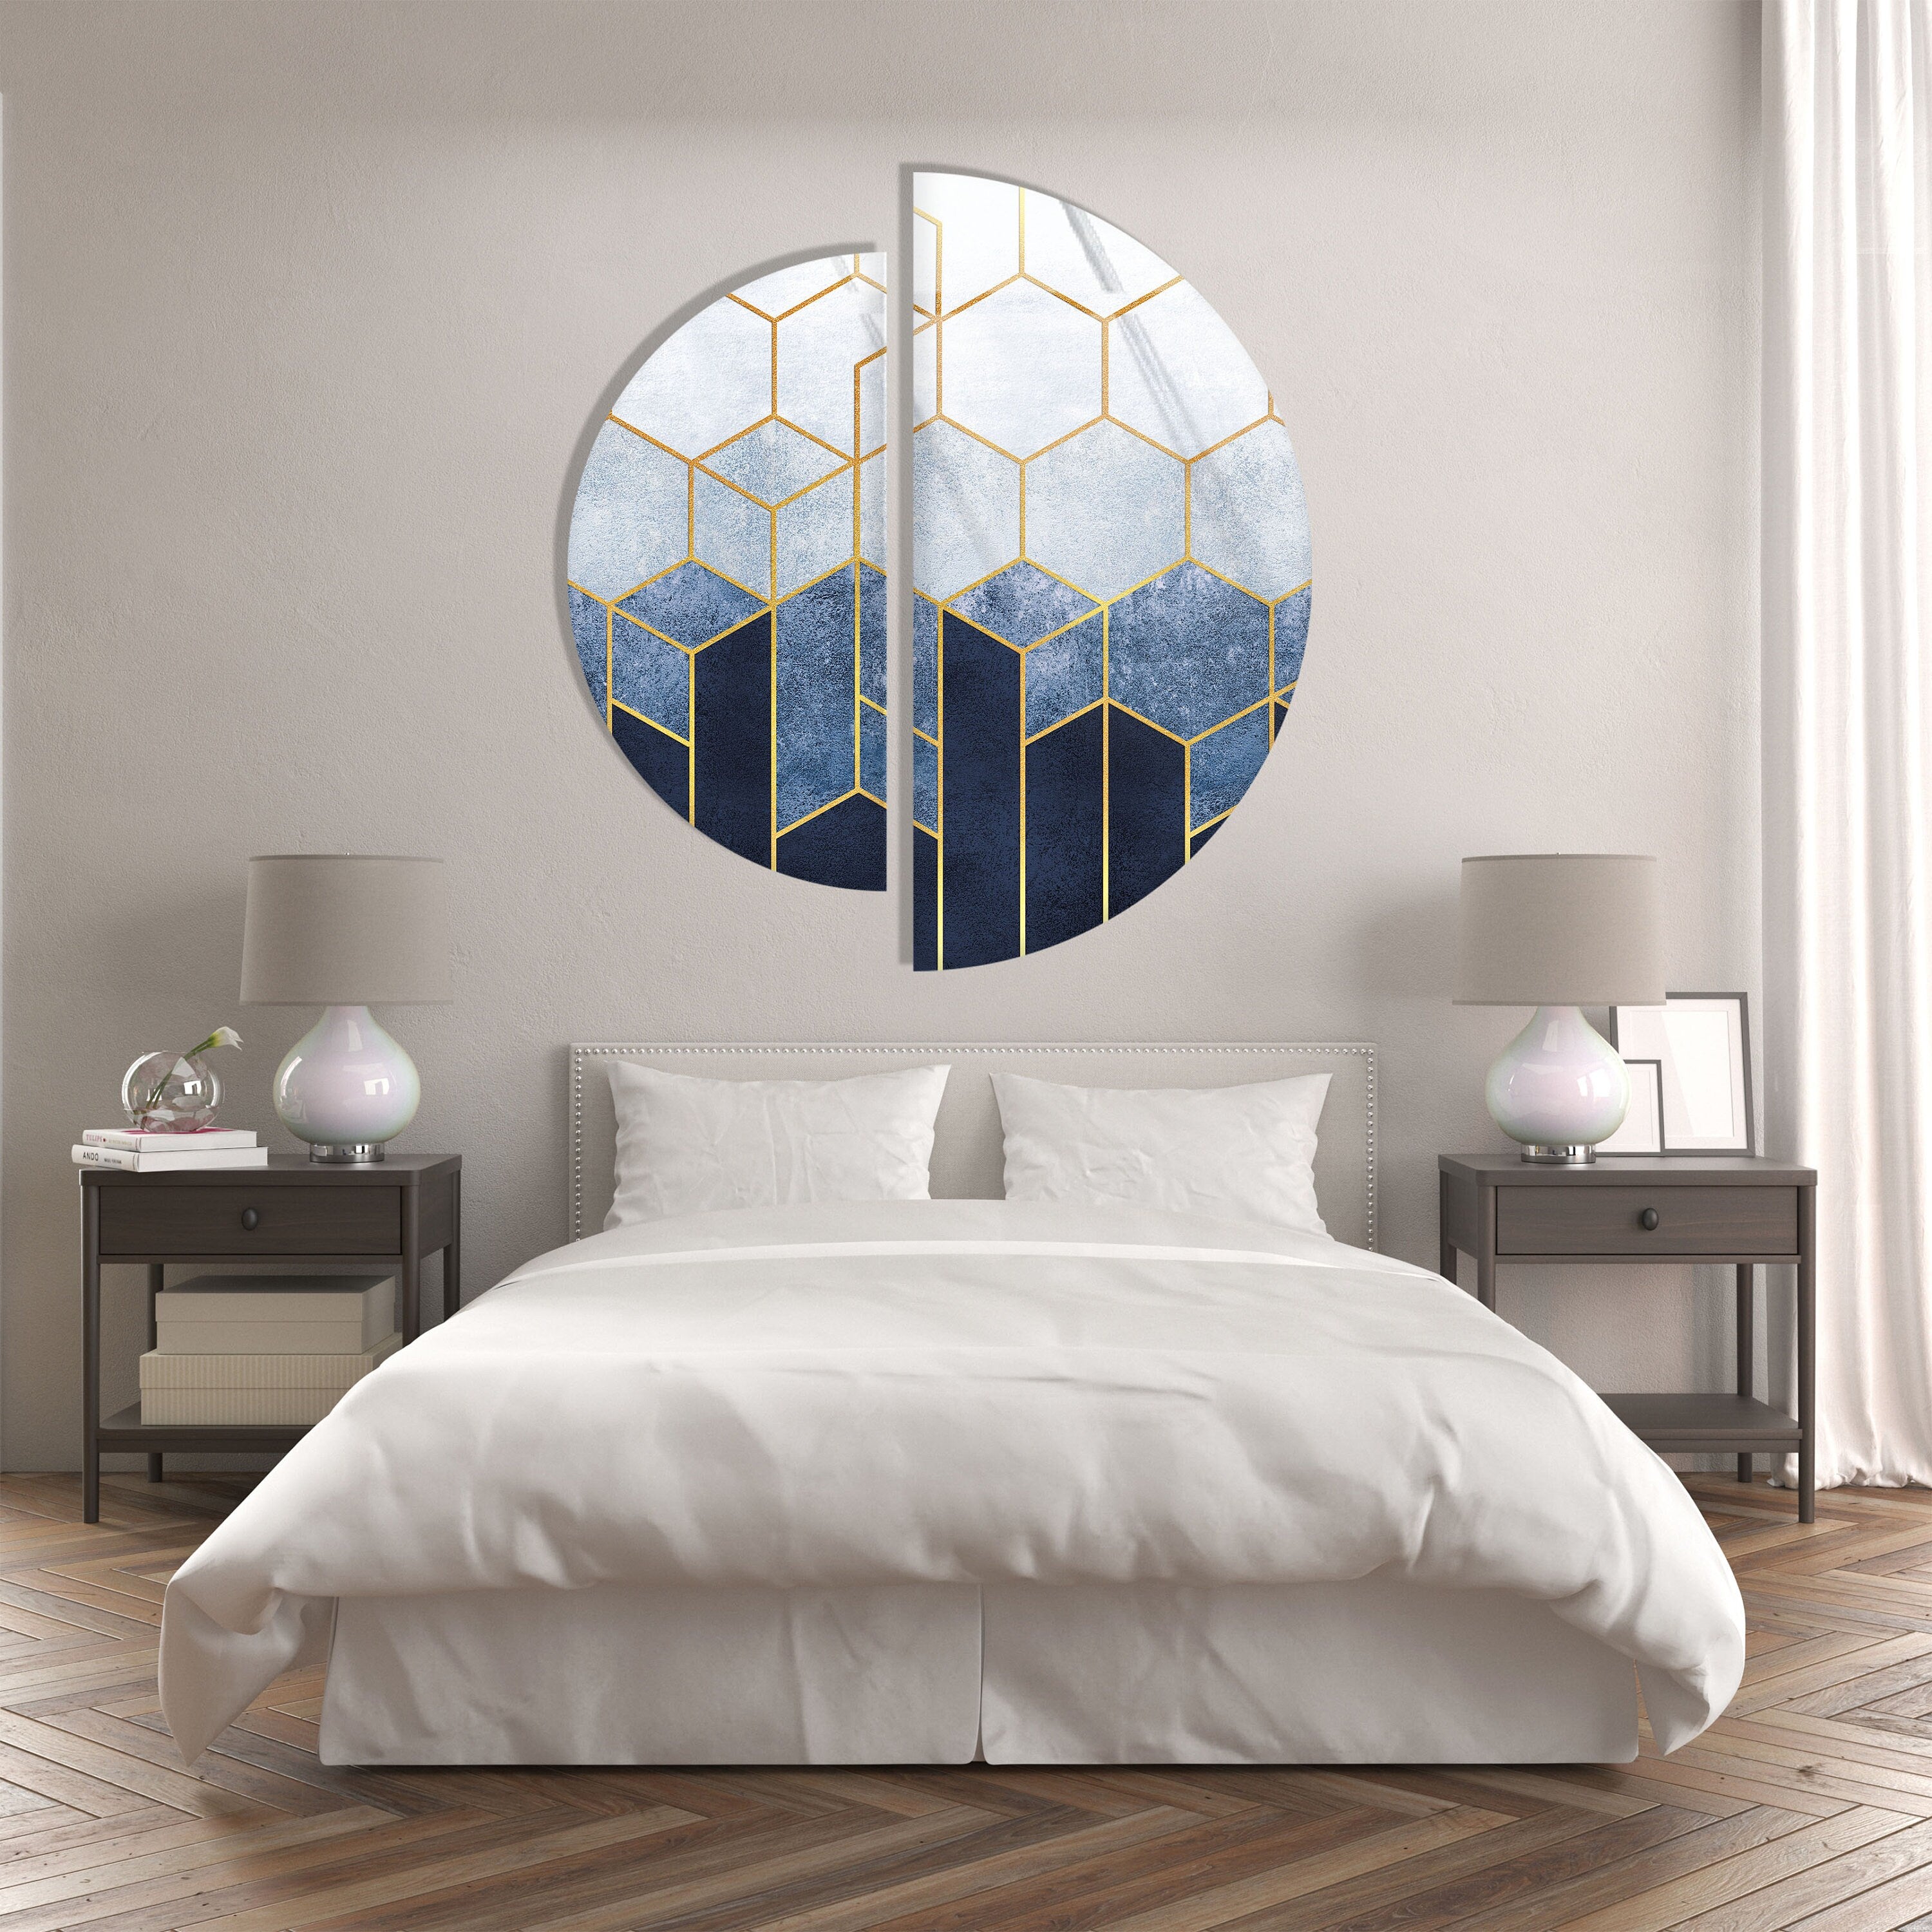 2 Piece Half Circle Abstract Hexagon Tempered Glass Wall Art